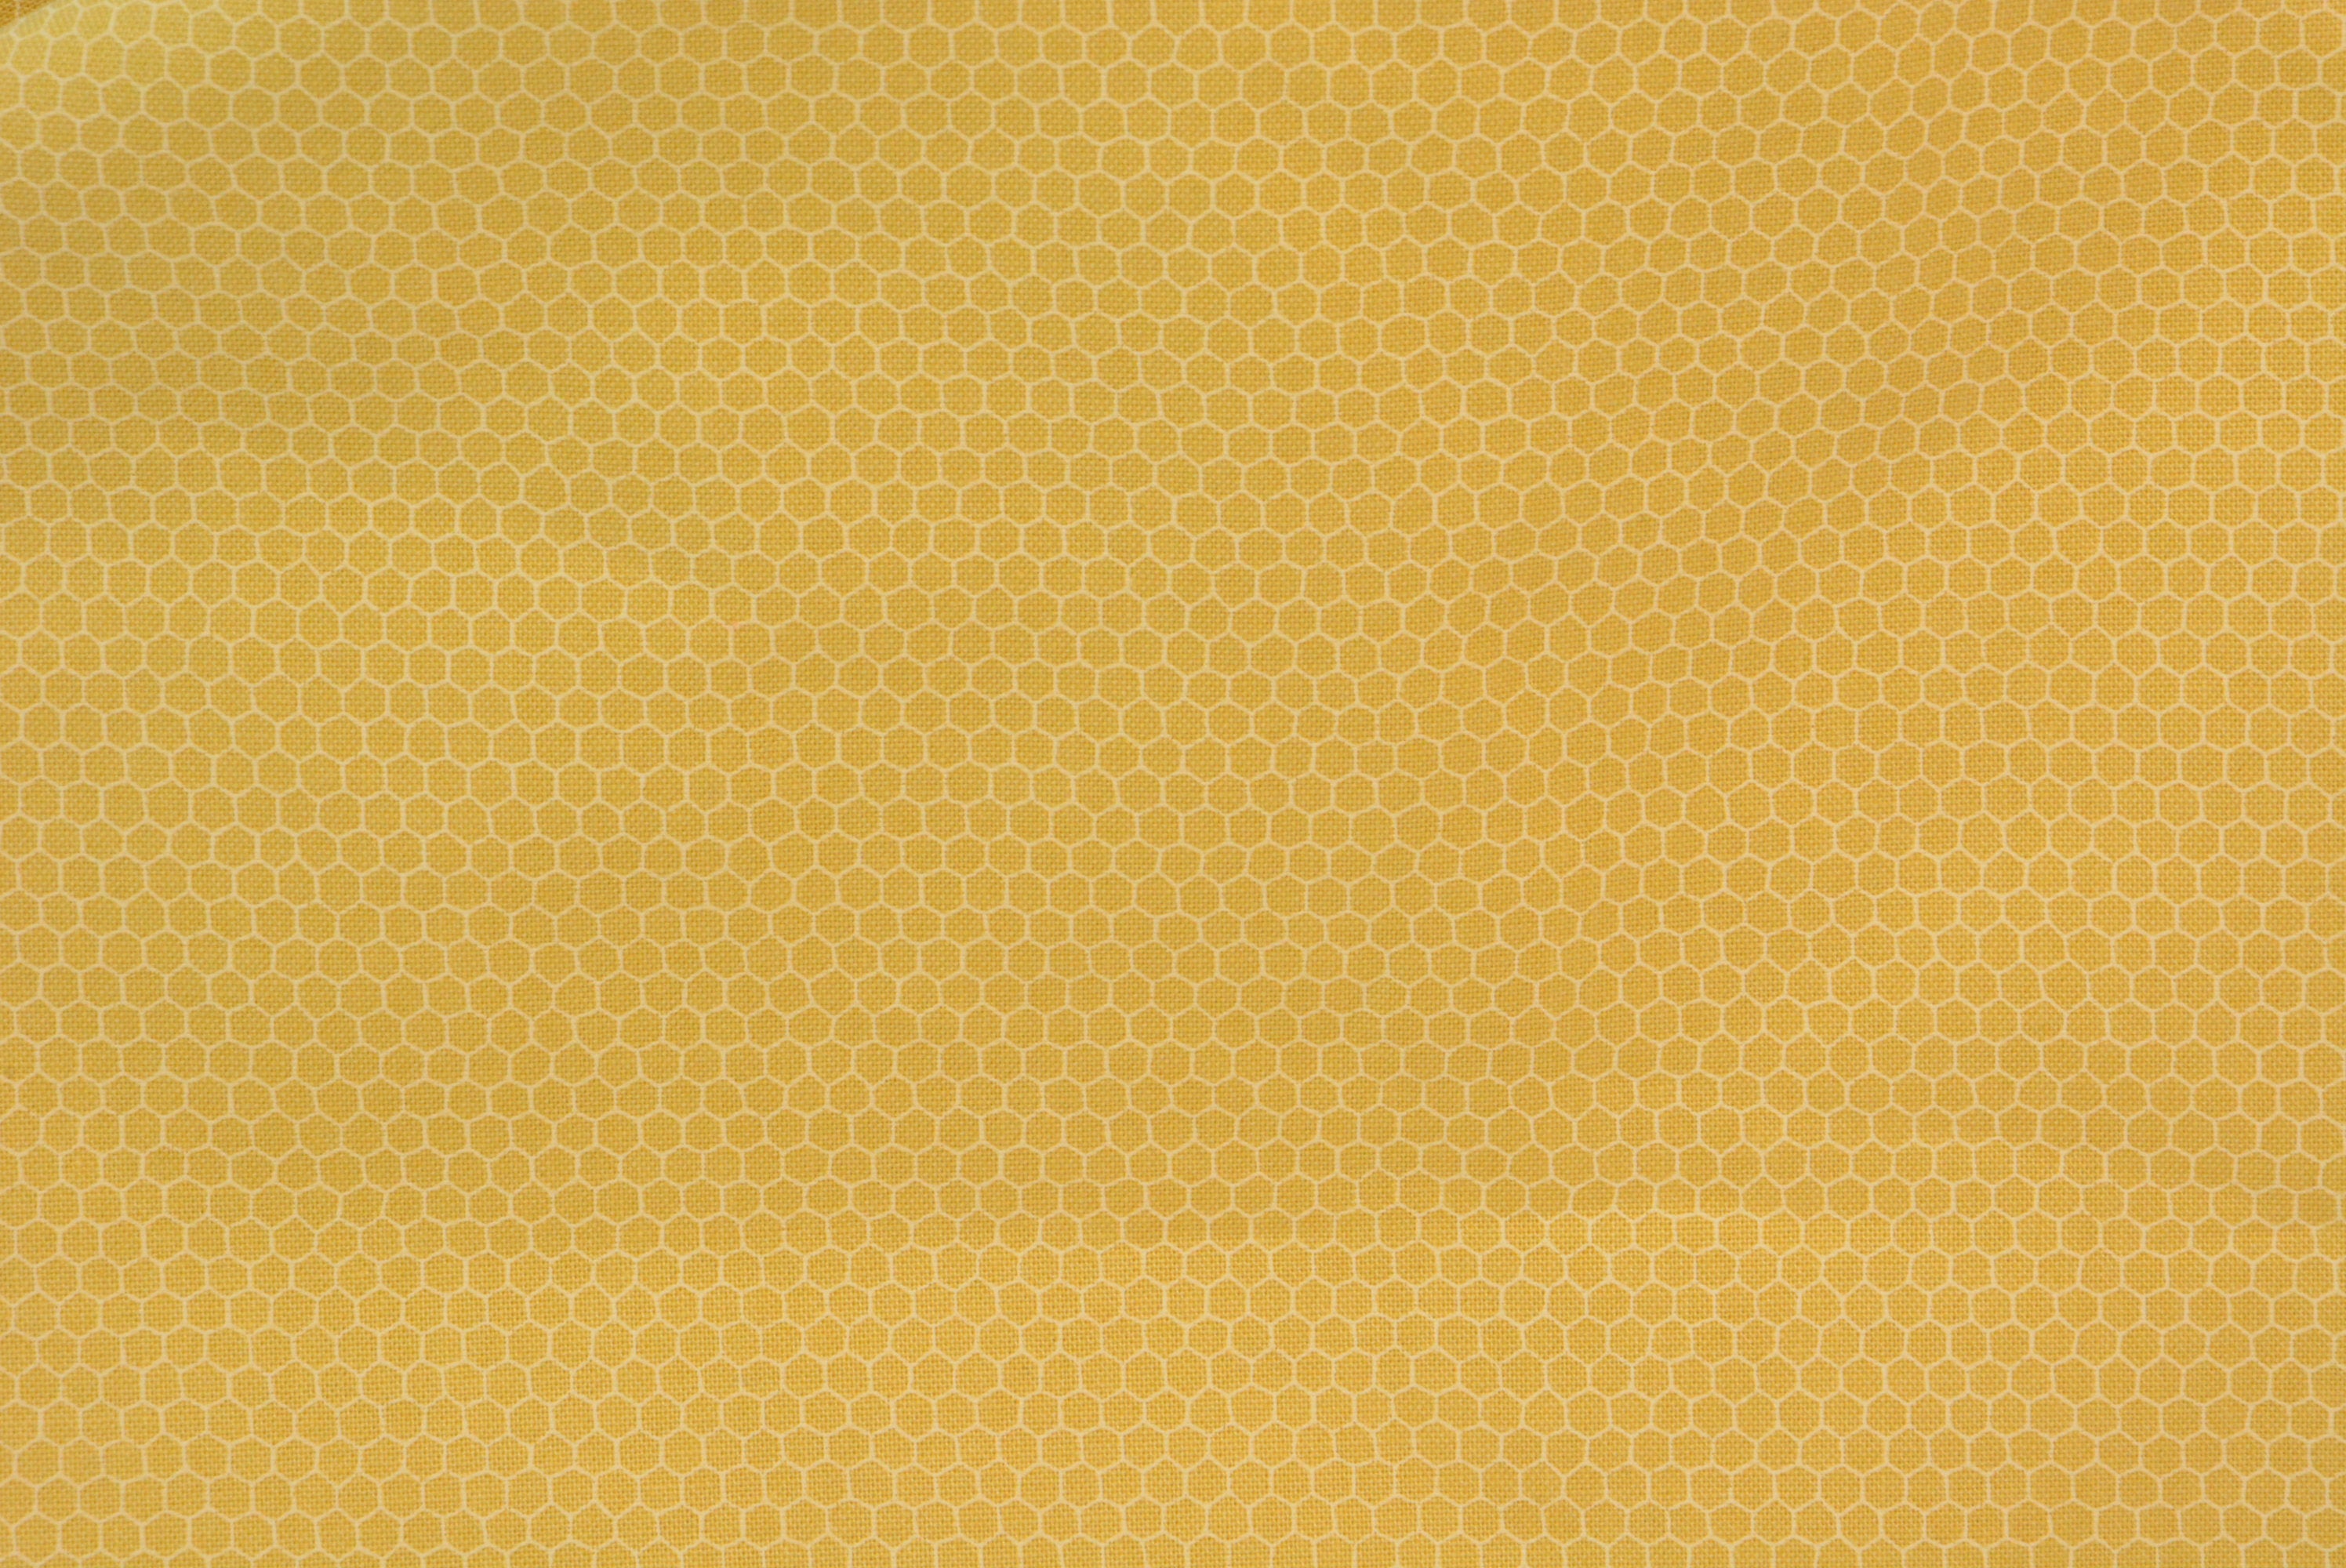 Honeycomb - Yellow